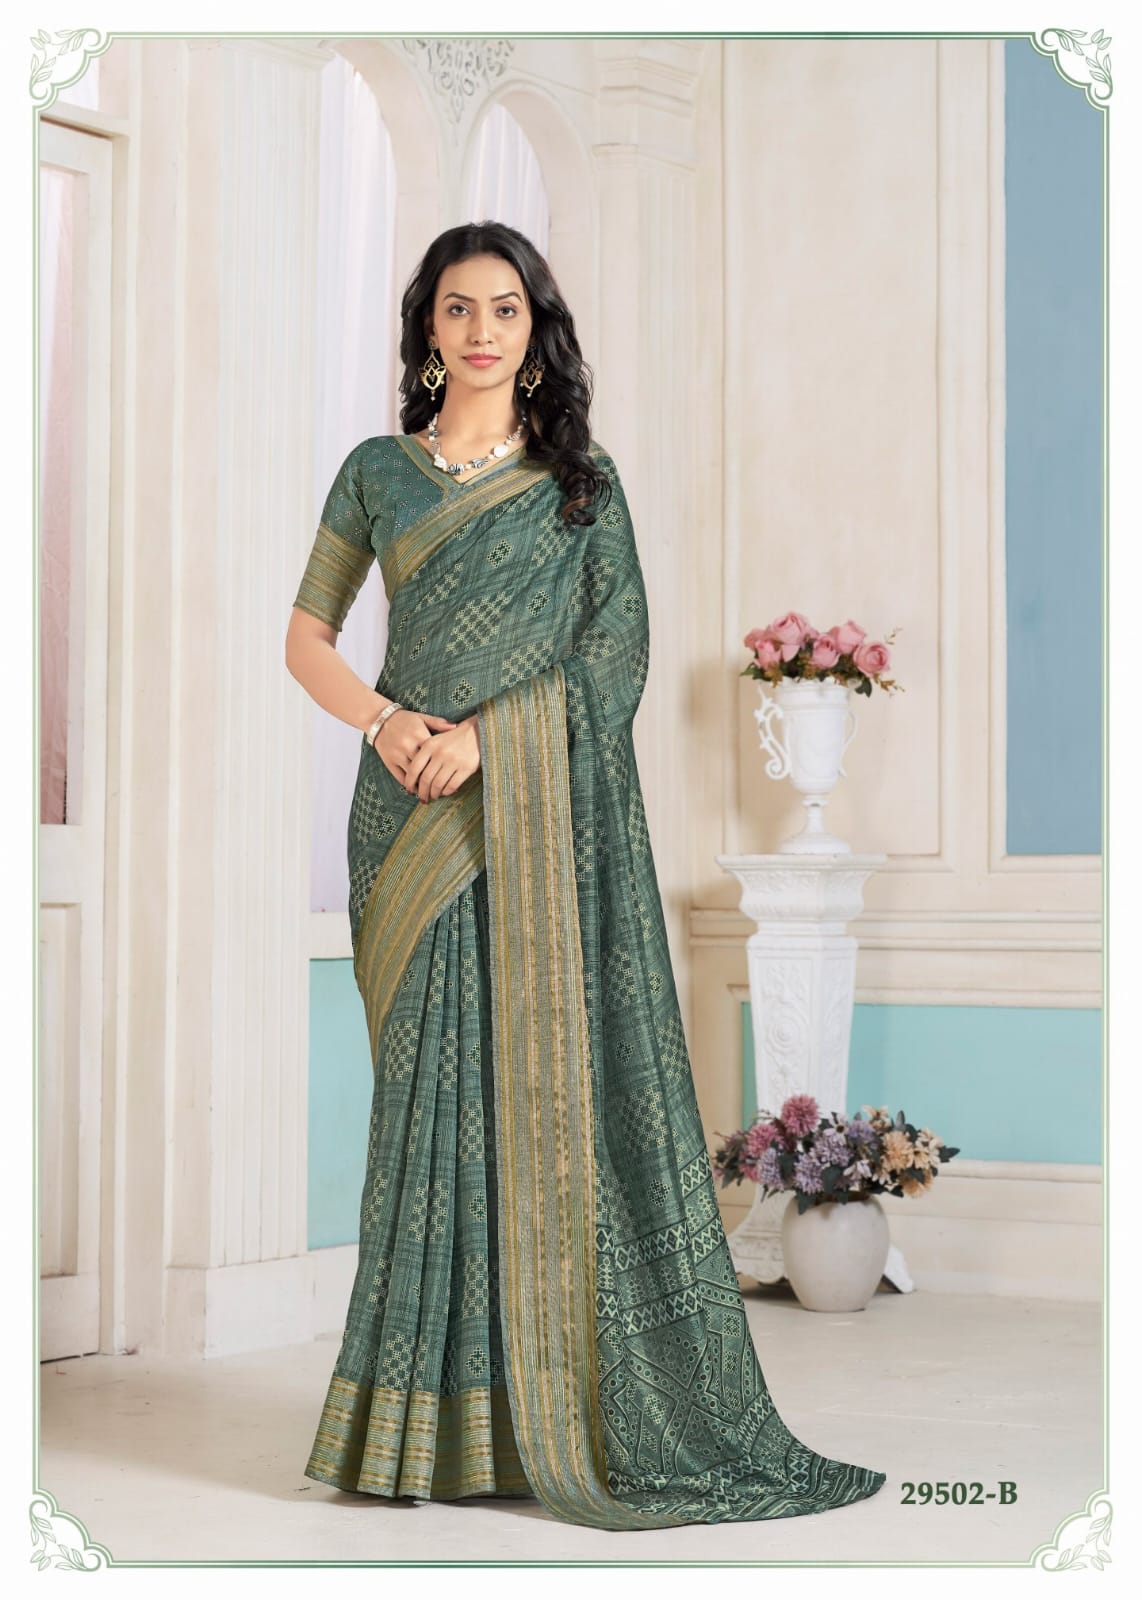 Vidhya Vol 2 Ruchi Soft Linen Sarees Supplier India